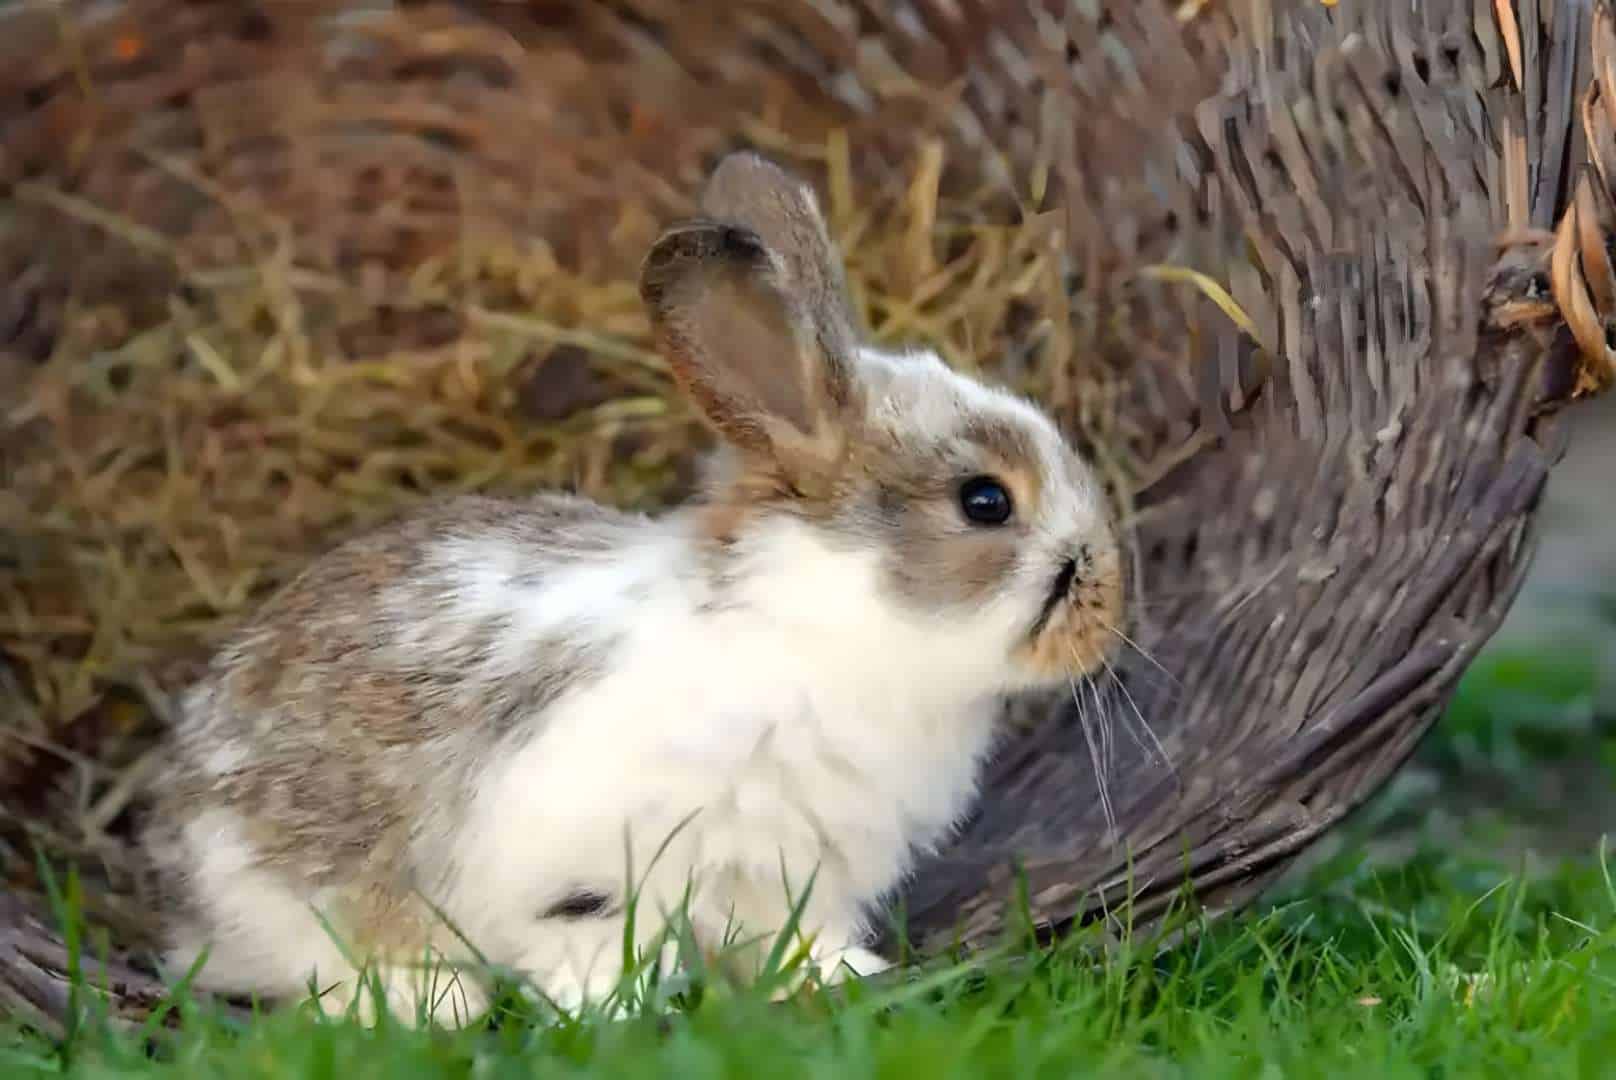 bunnies outside